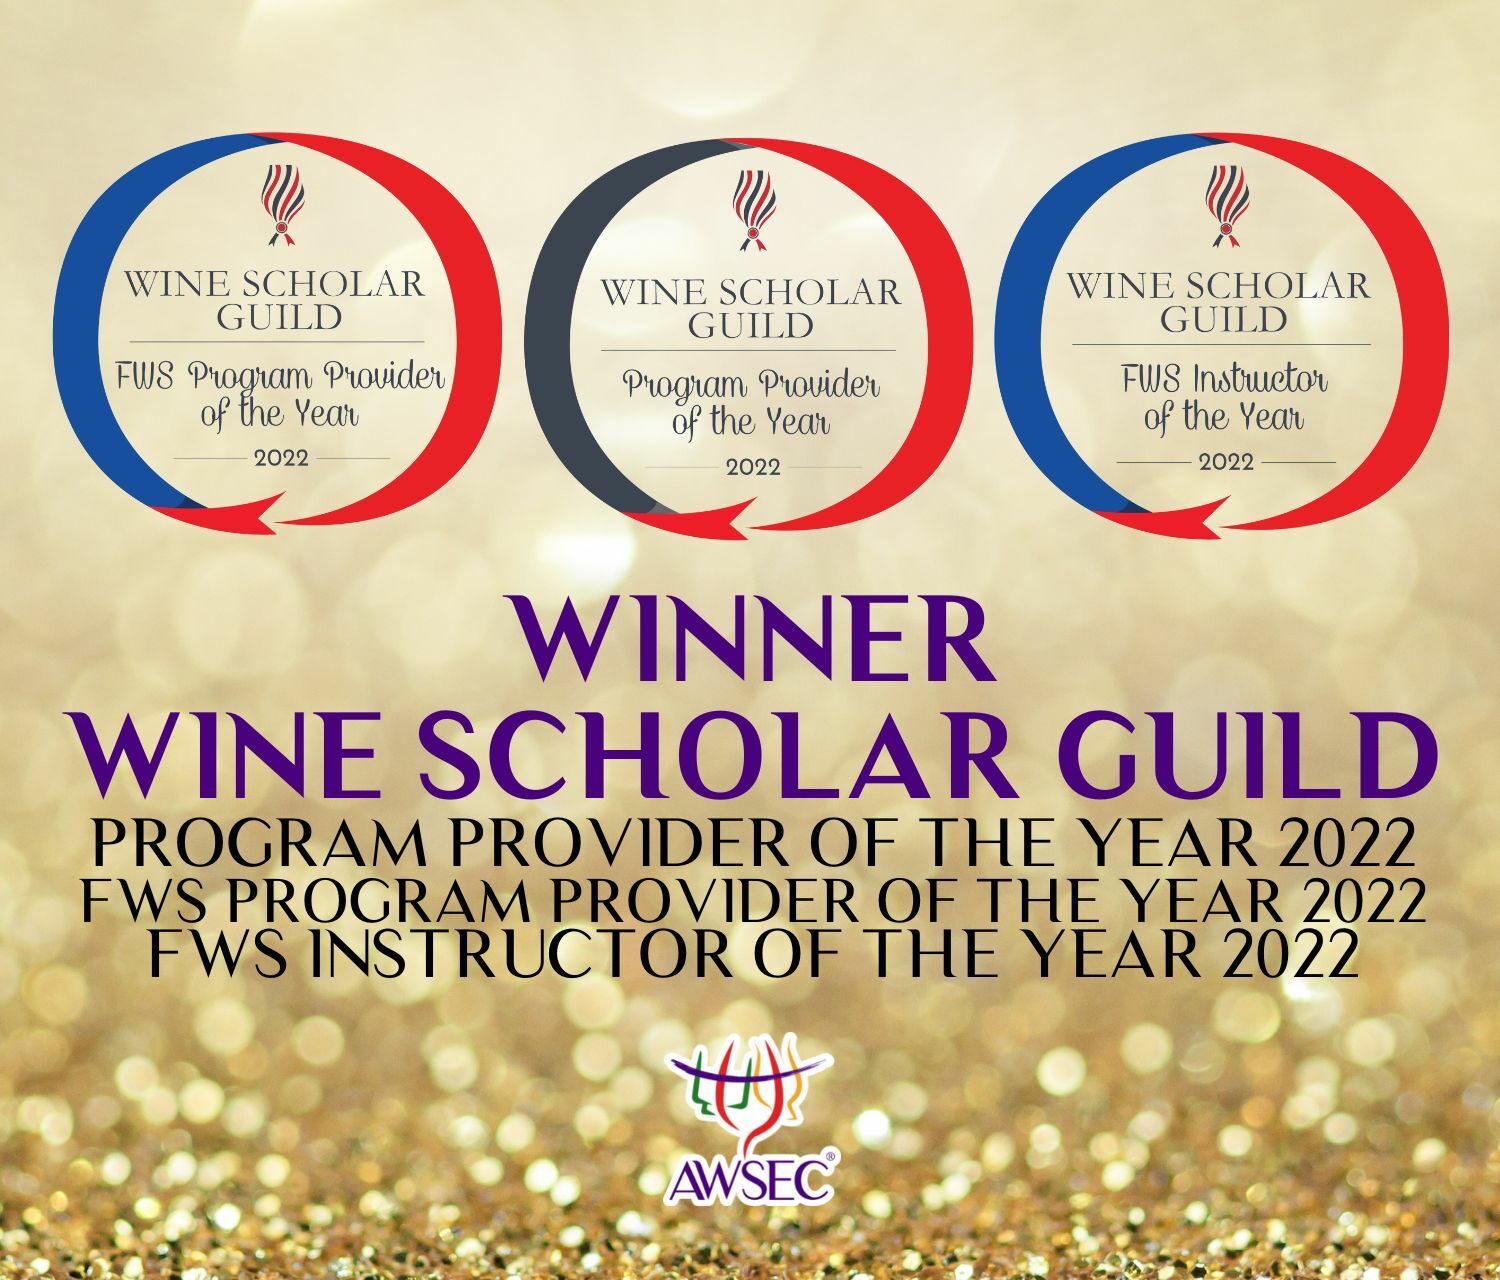 Wine Scholar Guild Program Provider of the Year 2022